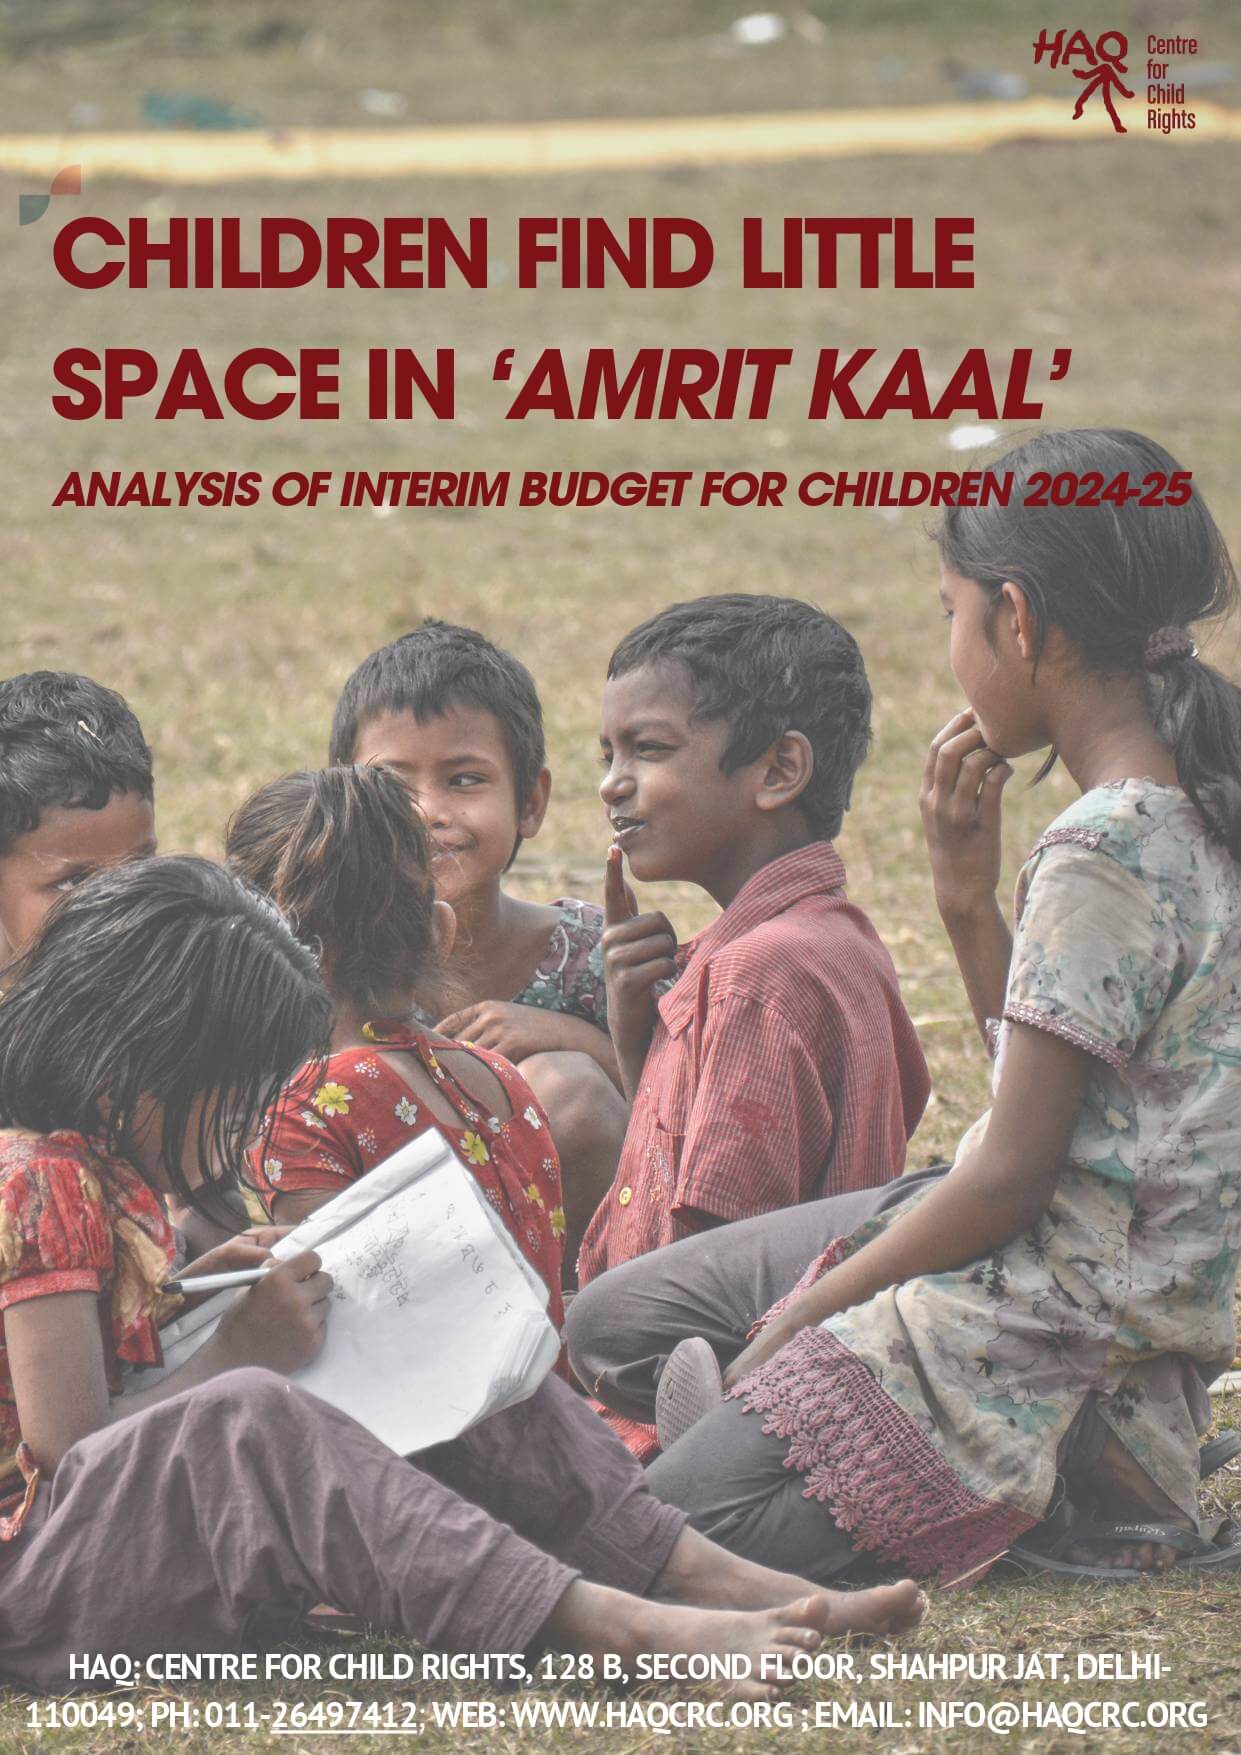 CHILDREN FIND LITTLE SPACE IN ‘AMRIT KAAL’ ANALYSIS OF INTERIM BUDGET FOR CHILDREN 2024-25